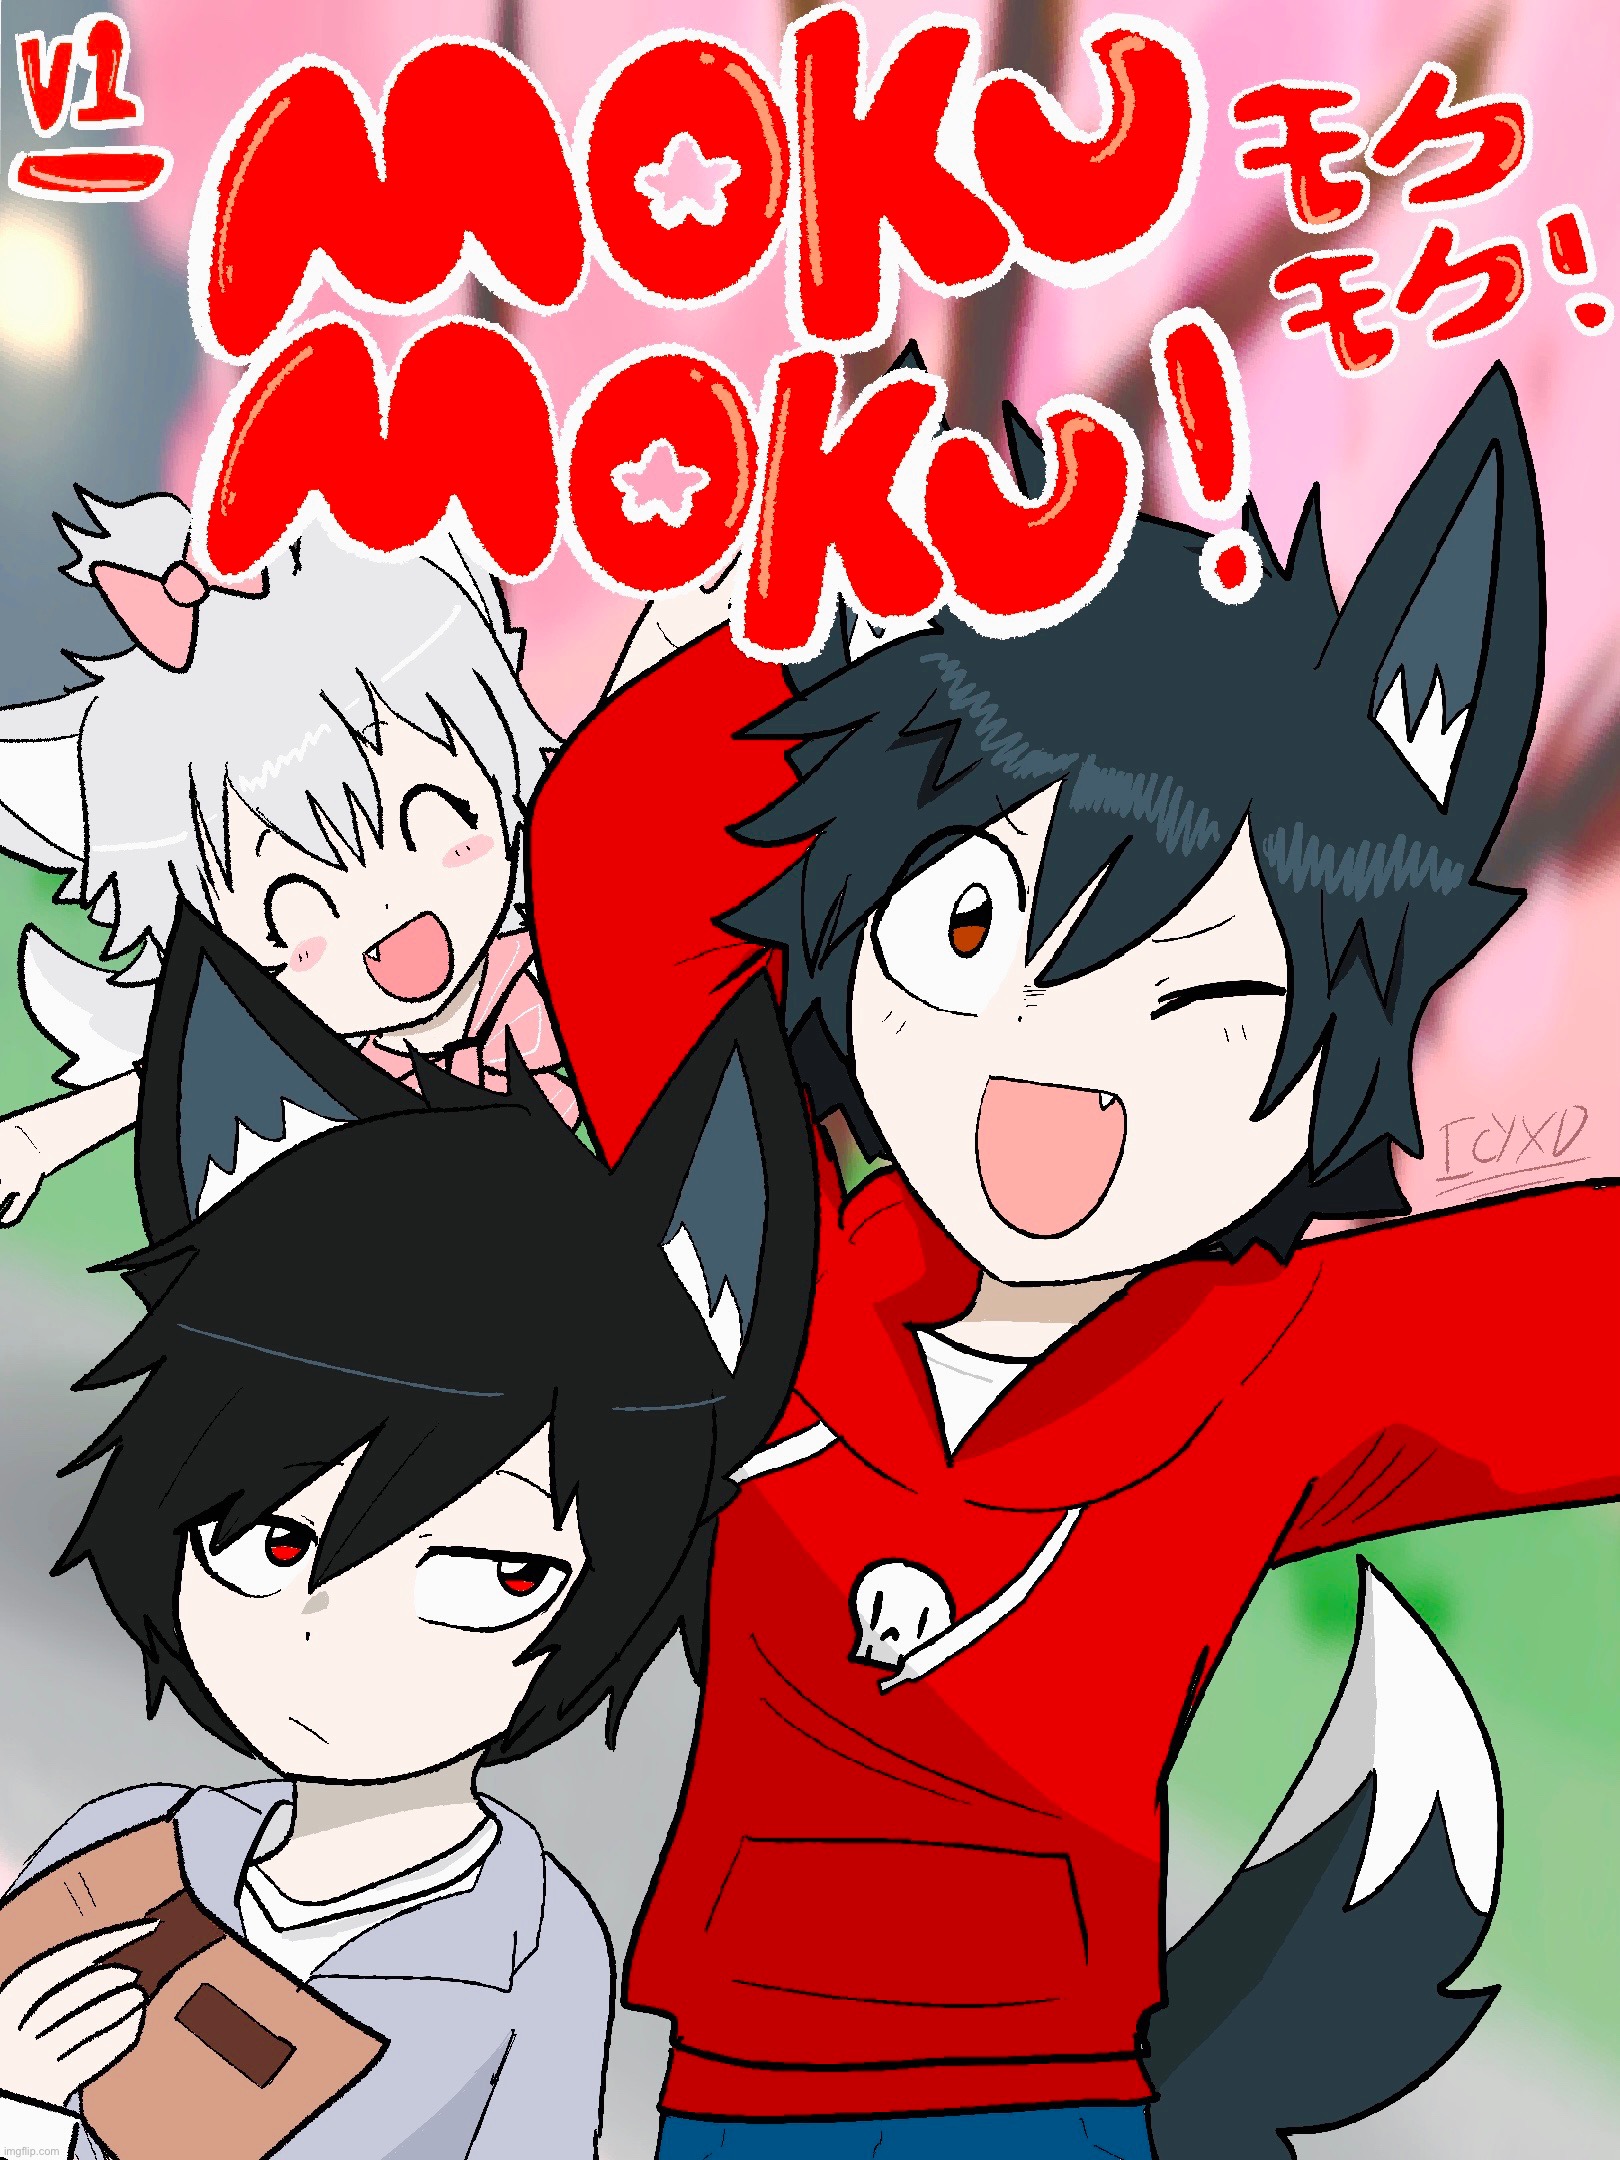 MokuMoku! SOON TO RELEASE! | image tagged in webtoon,manga,slice of life,wolves | made w/ Imgflip meme maker